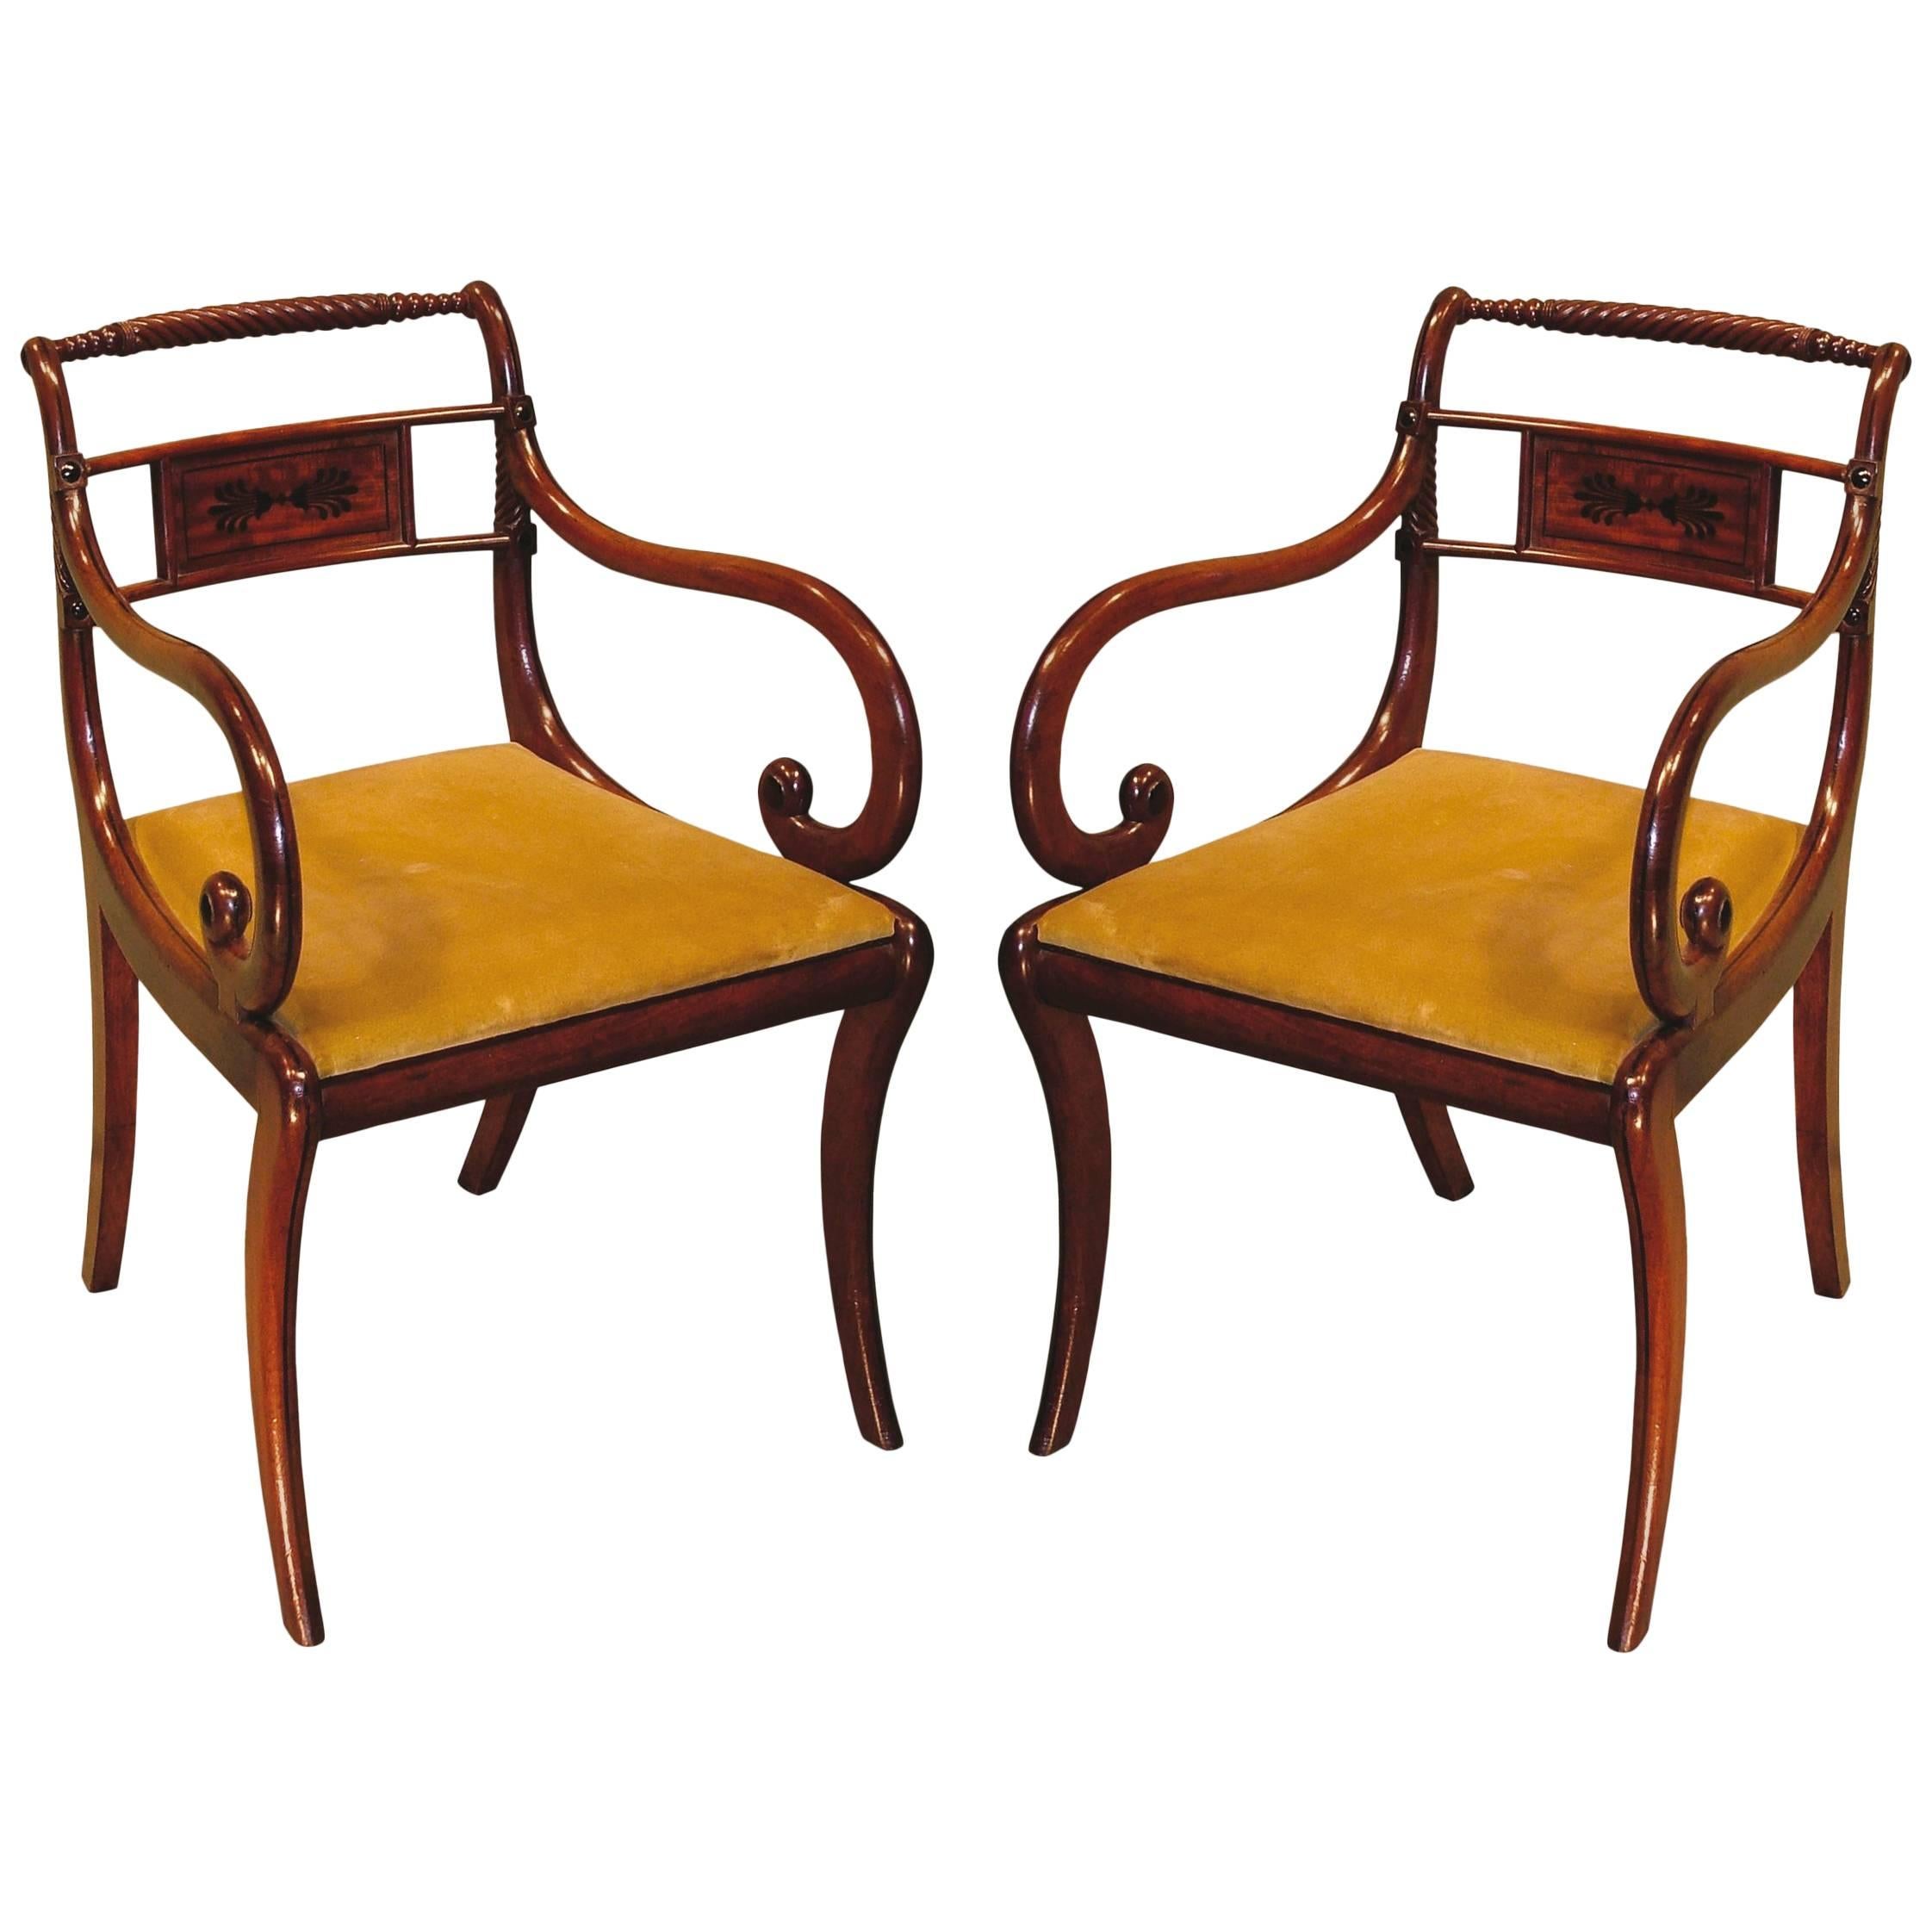 Regency period mahogany rope-twist armchairs